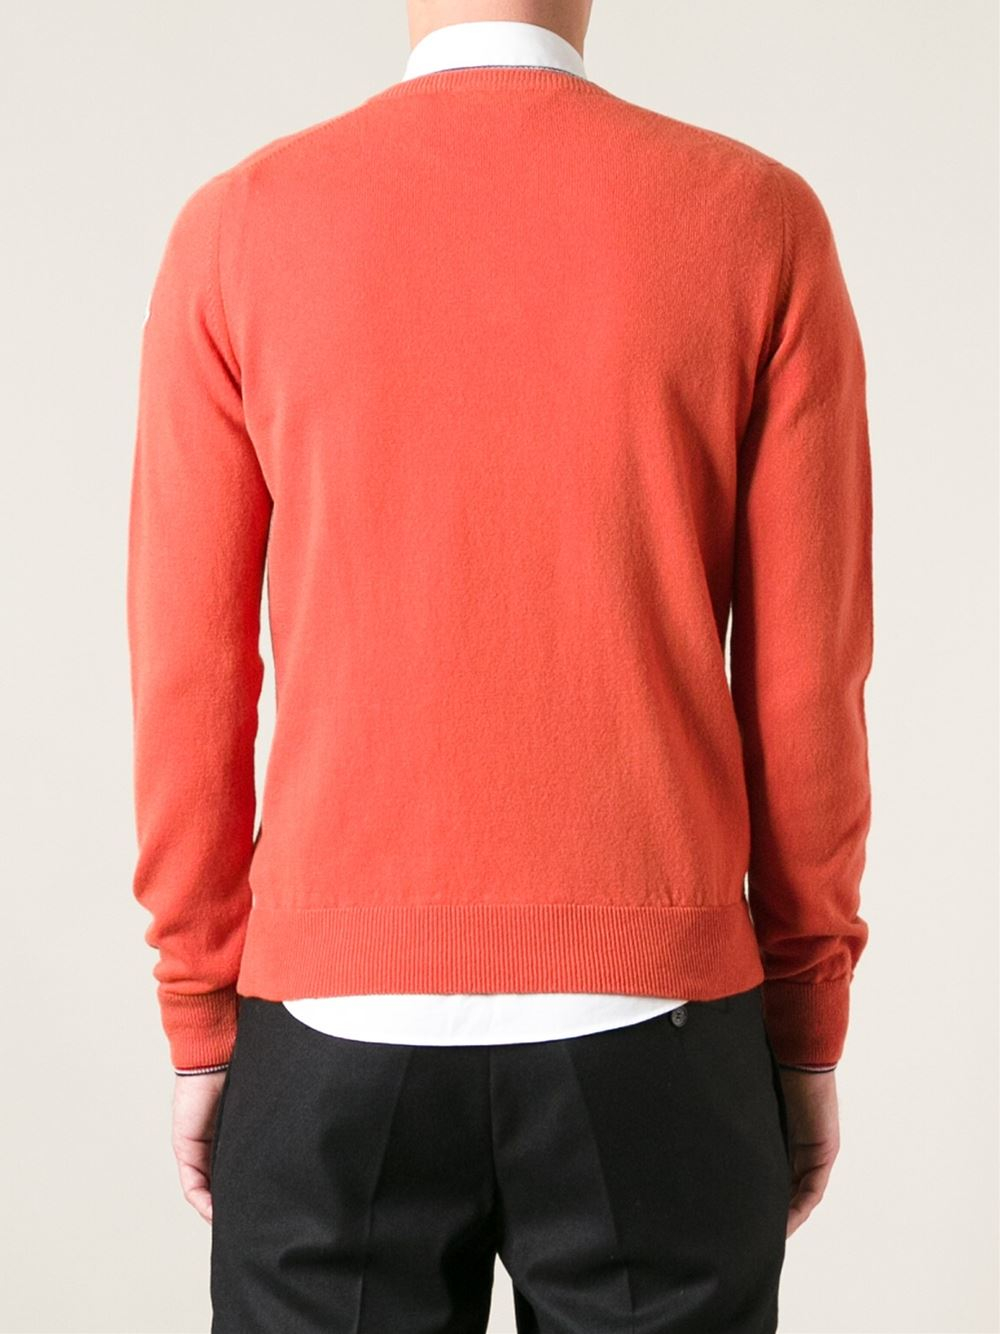 Lyst - Moncler Crew Neck Sweater in Orange for Men